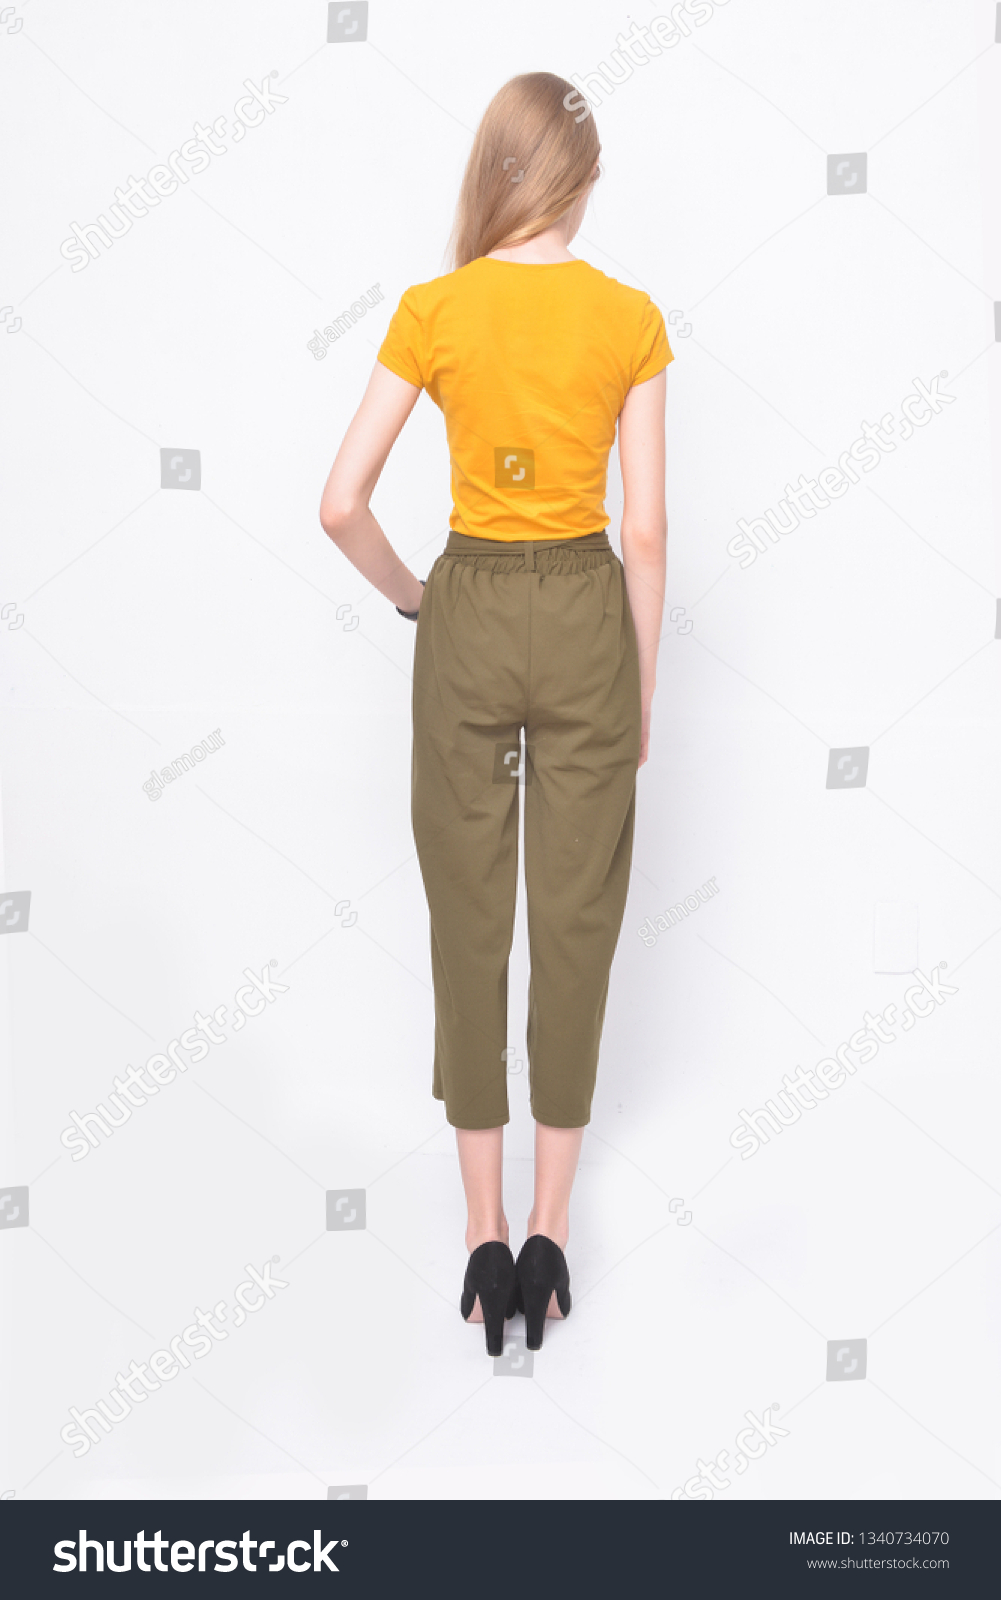 yellow shirt and brown pants